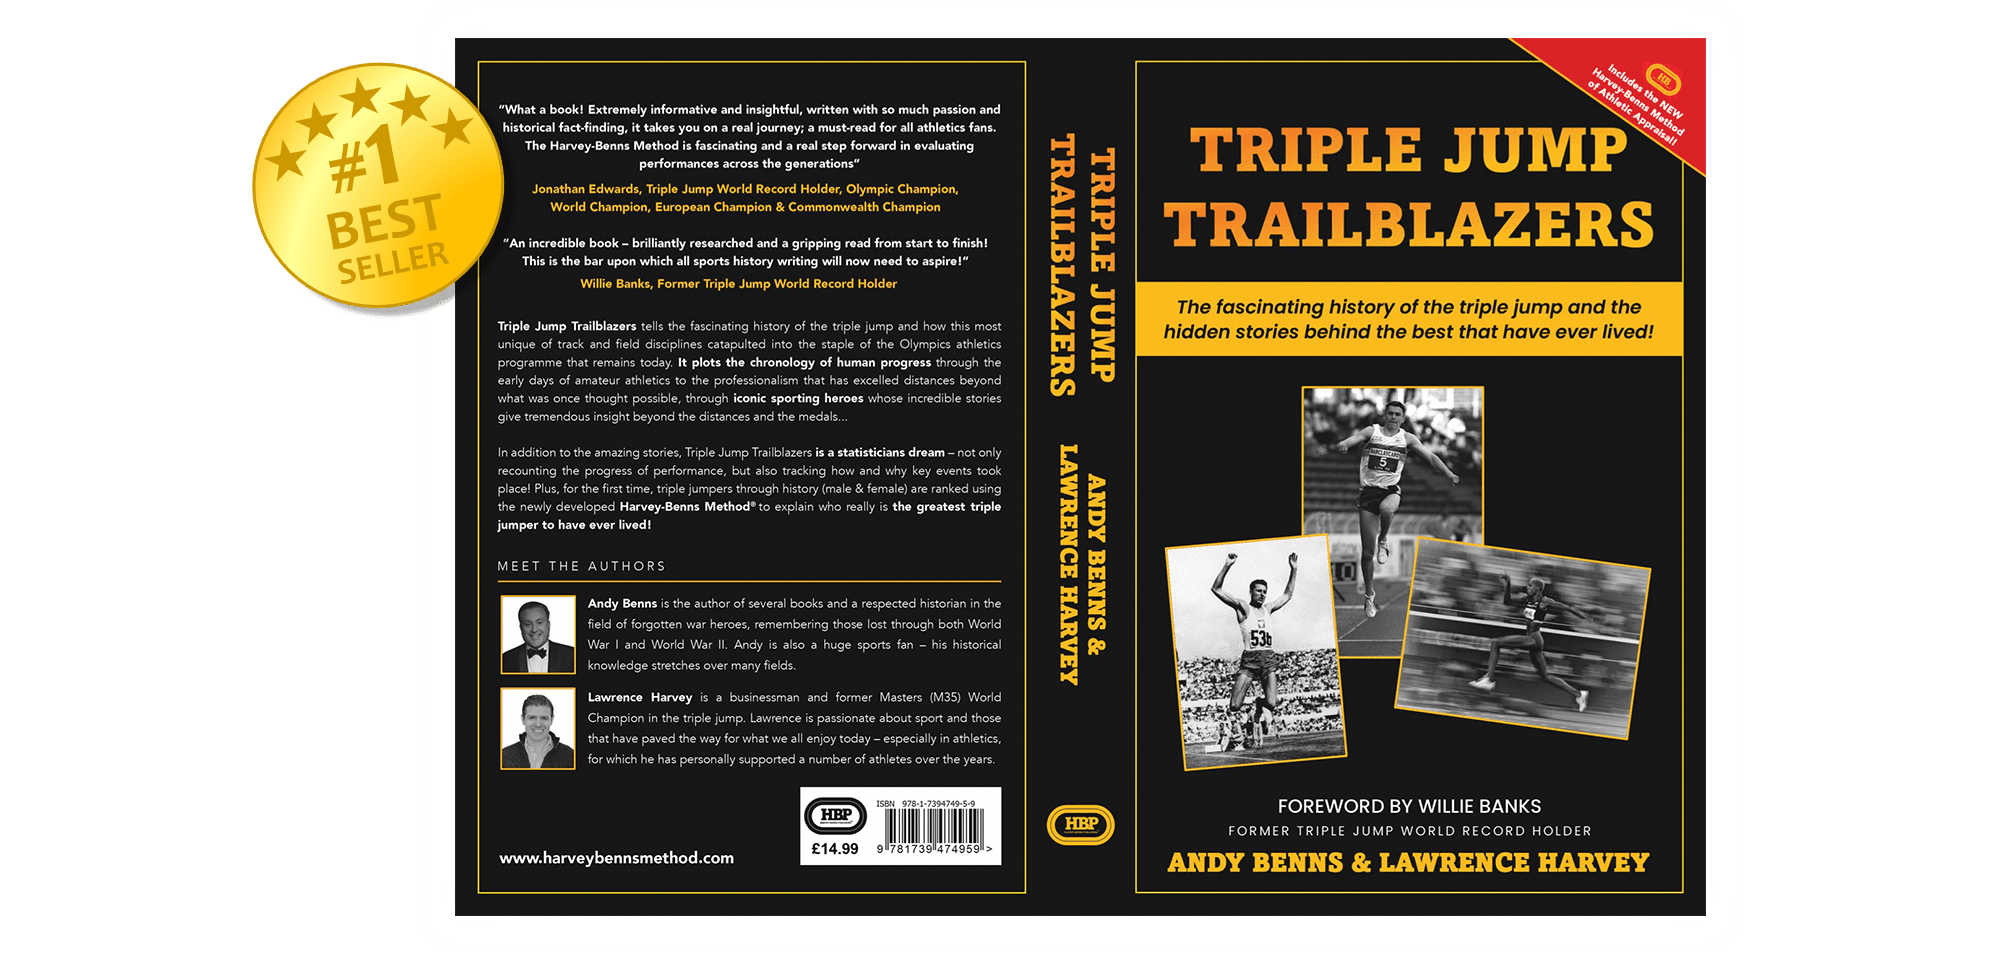 Buy The Triple Jump Trailblazers Book - A #1 BEST-SELLER